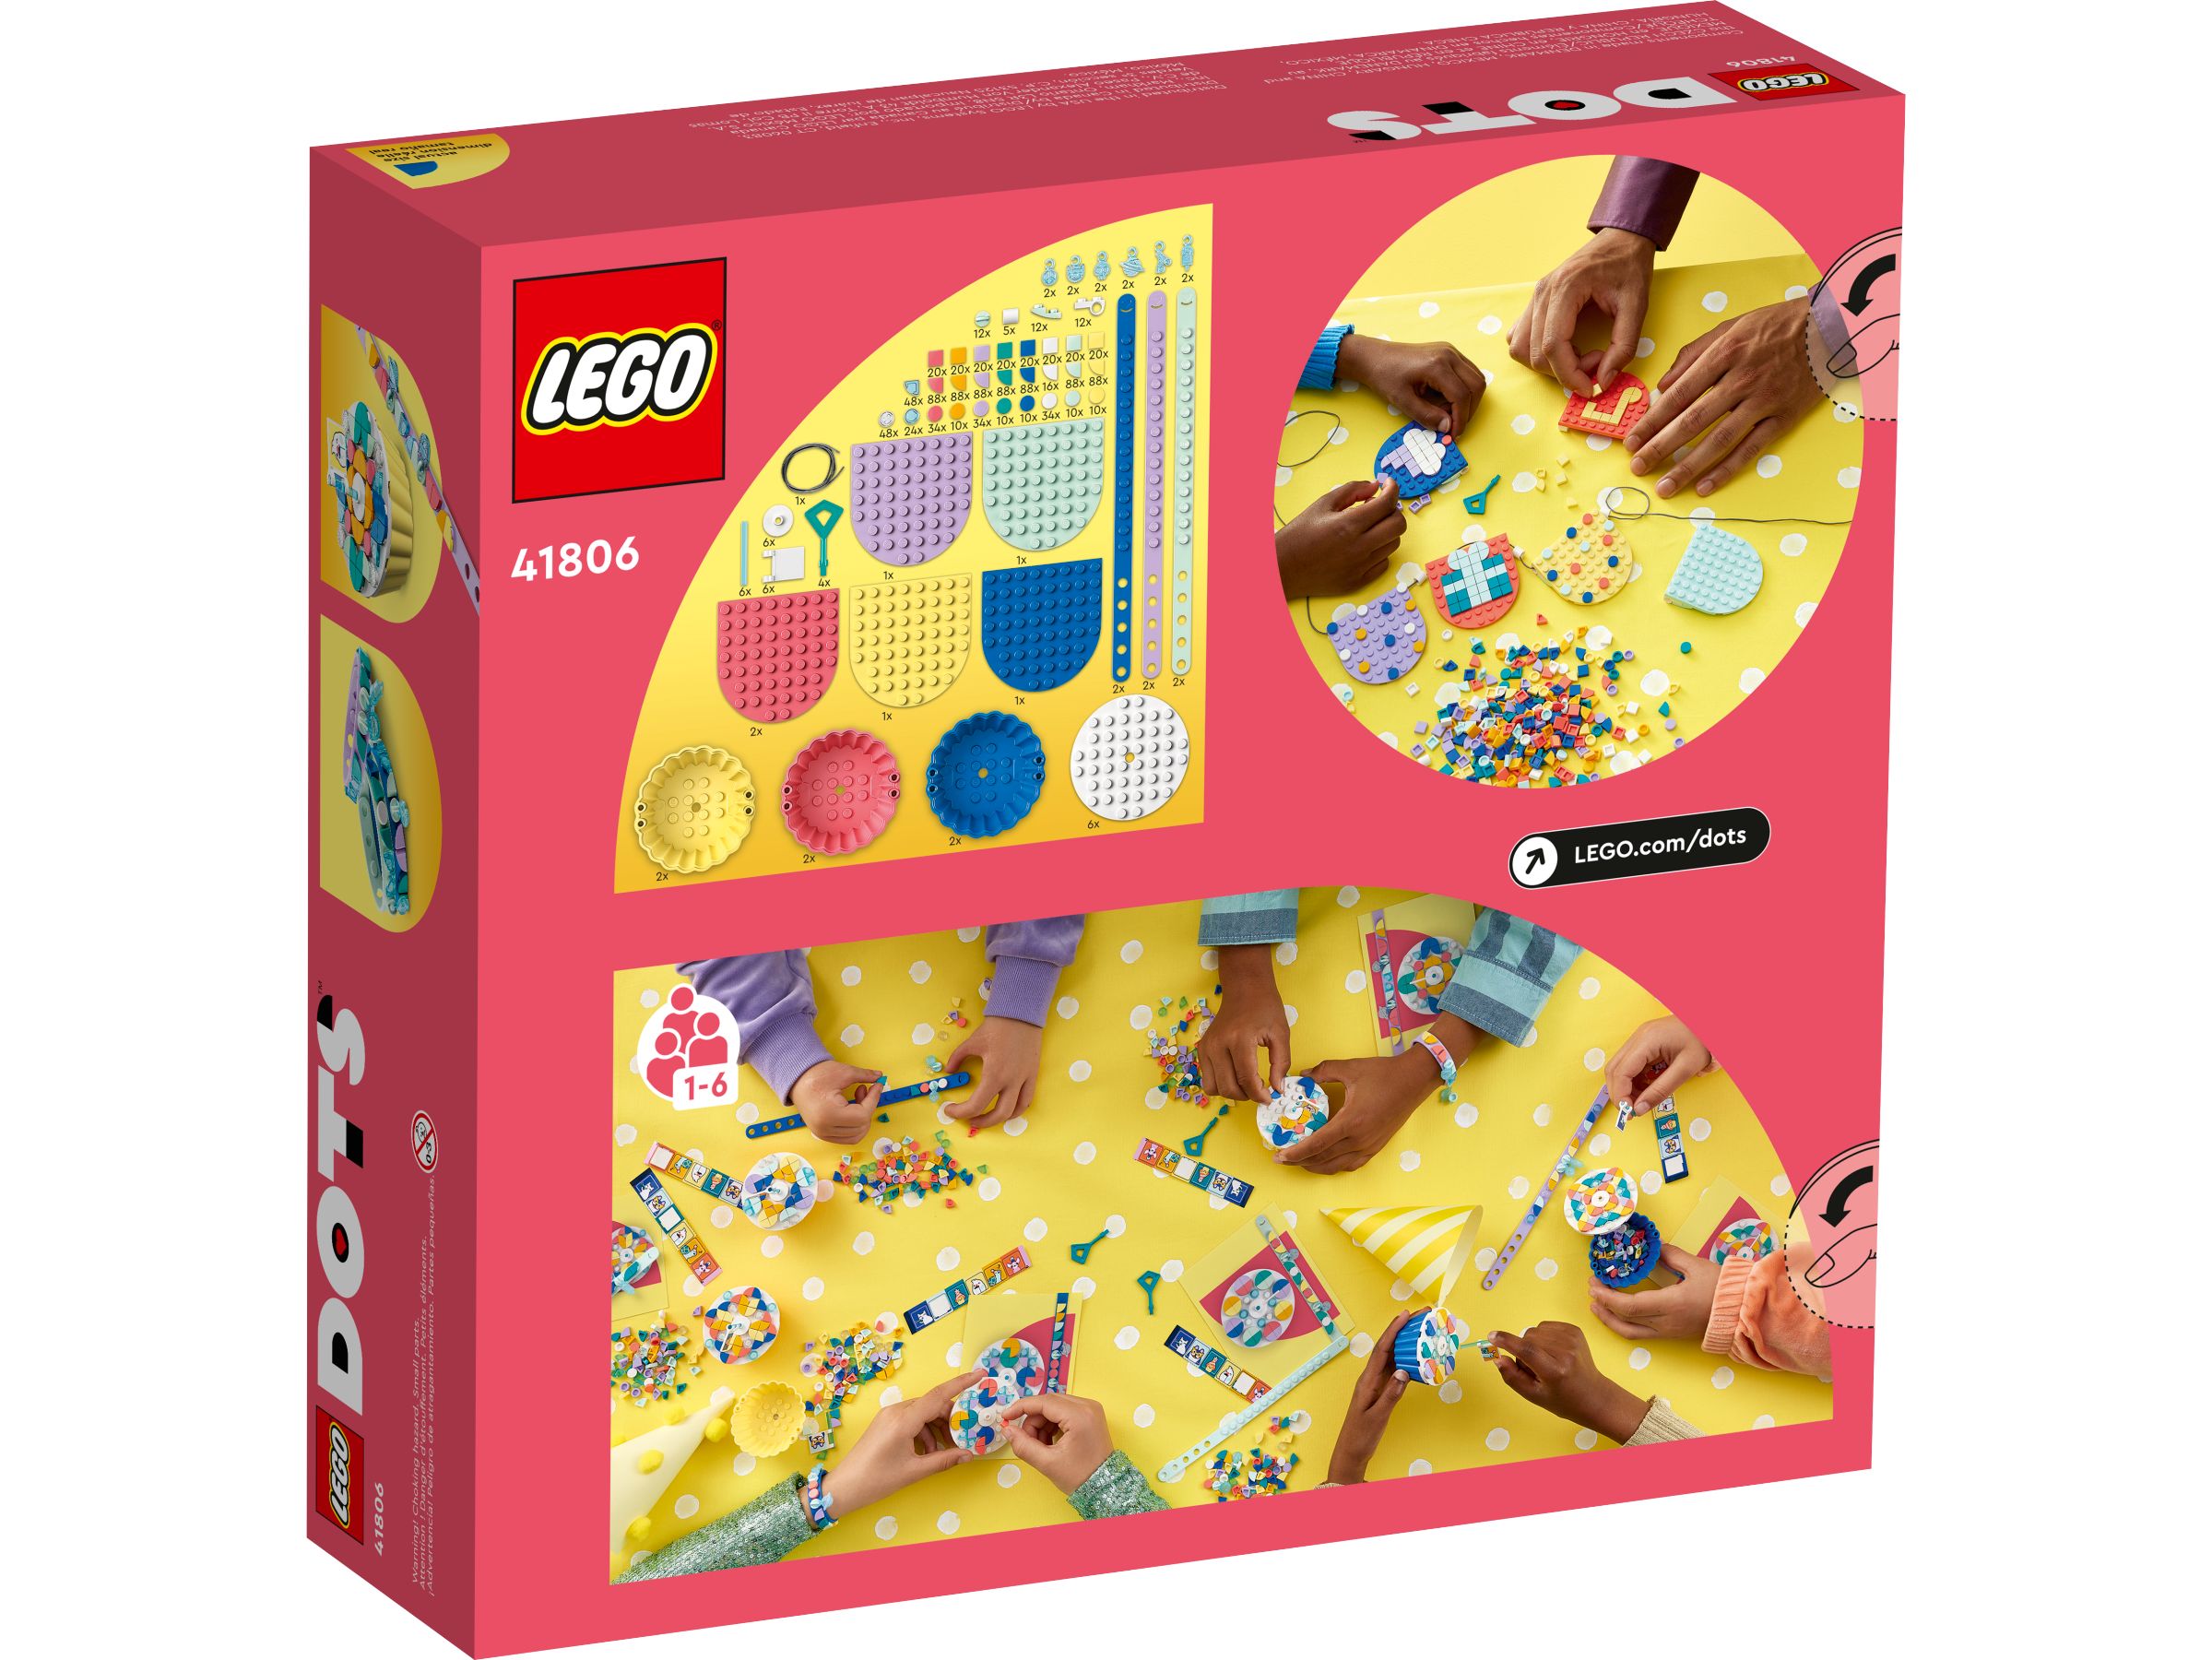 LEGO Dots 41806 Ultimatives Partyset LEGO_41806_alt4.jpg